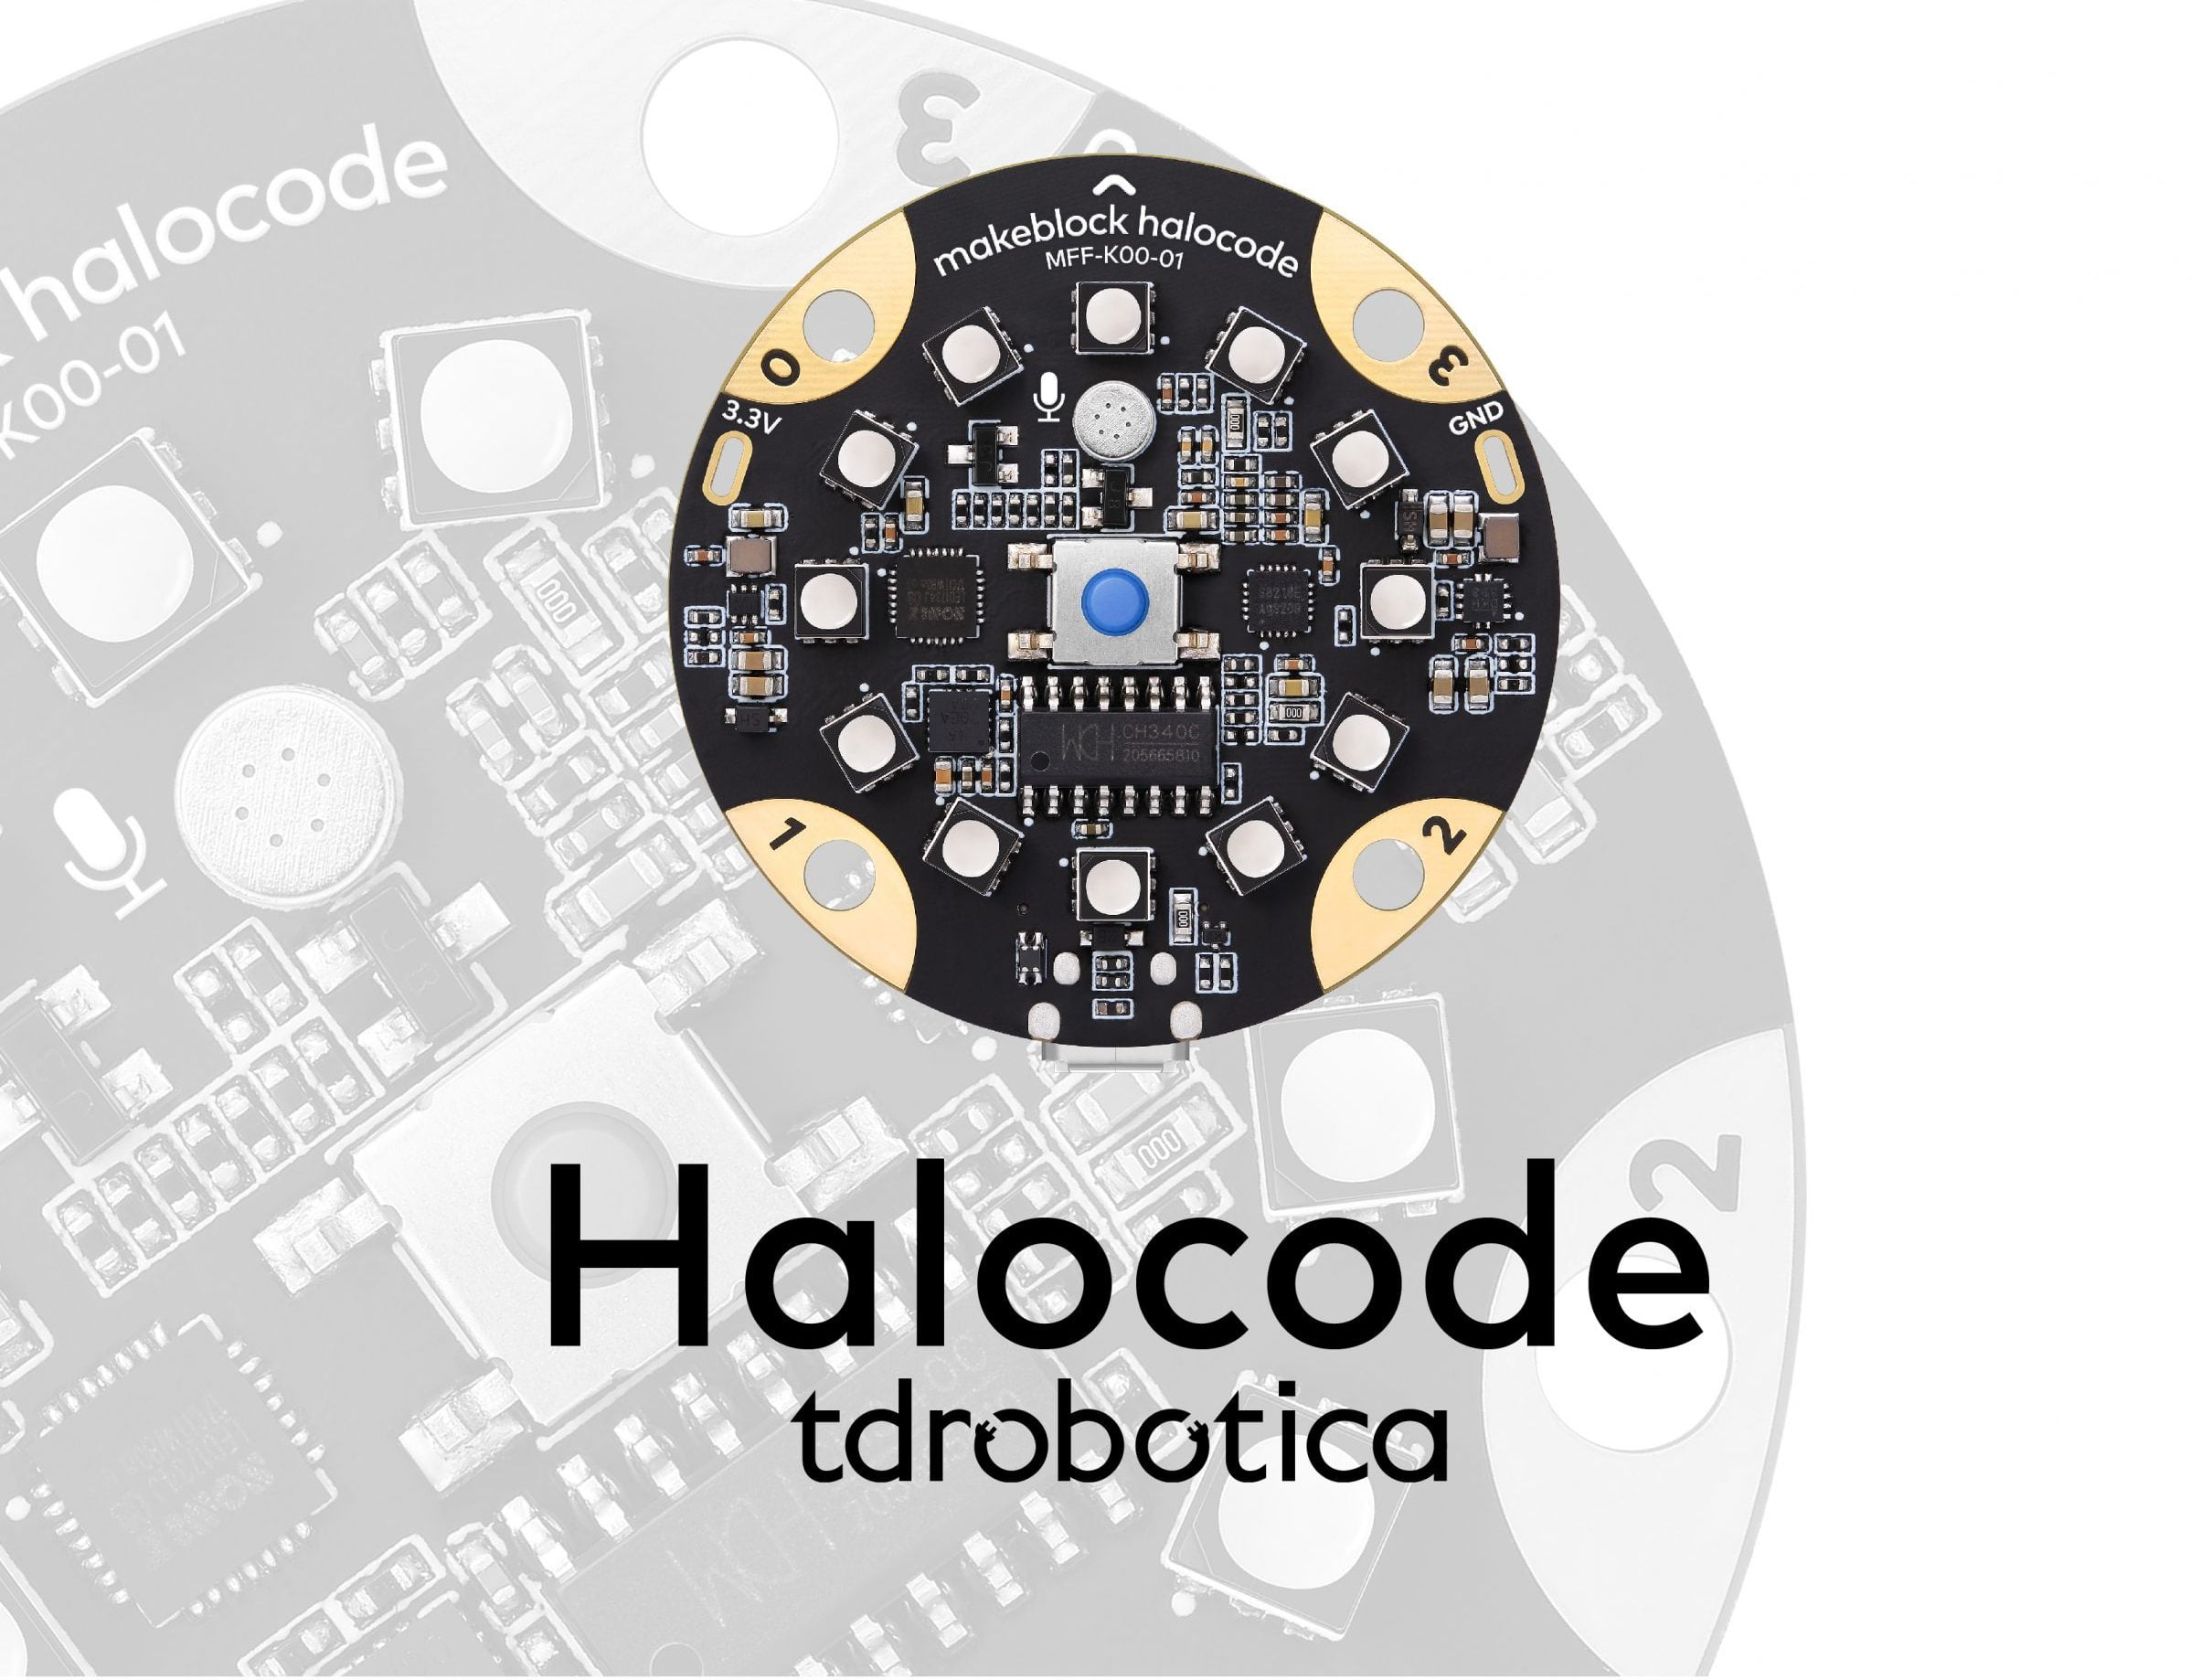 halcocode